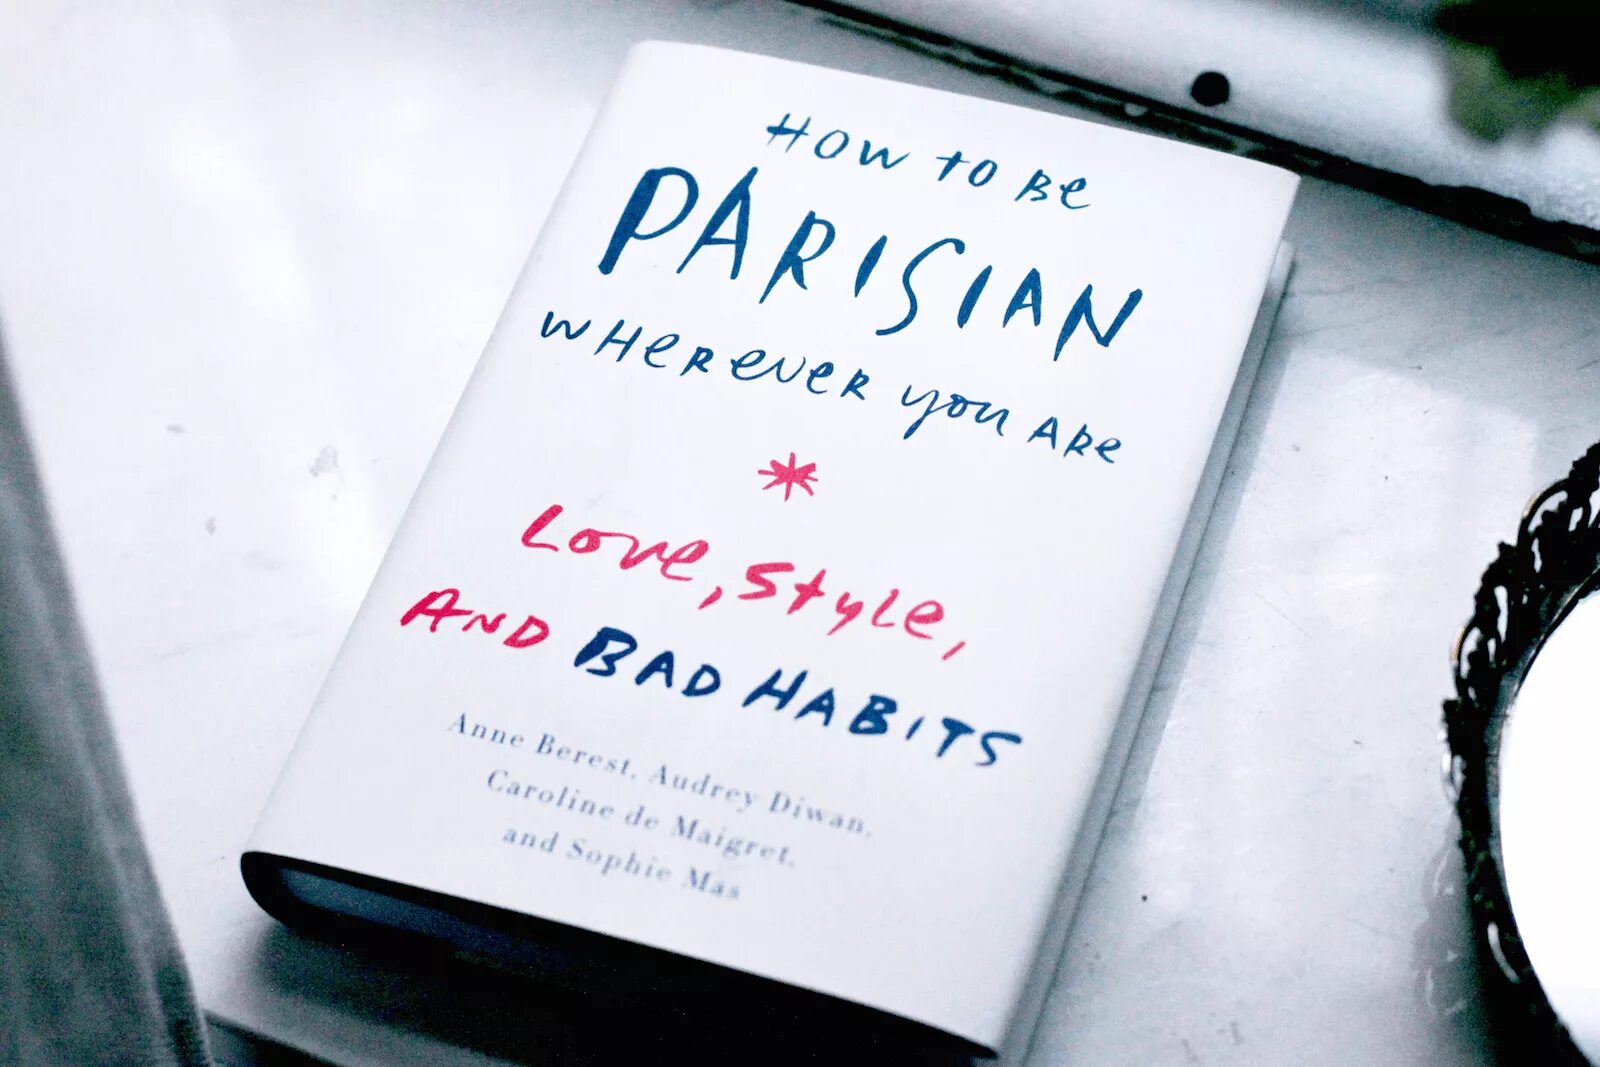 How to be Parisian книга. Как стать парижанкой книга. How to be Parisian wherever you are. Maigret книга.